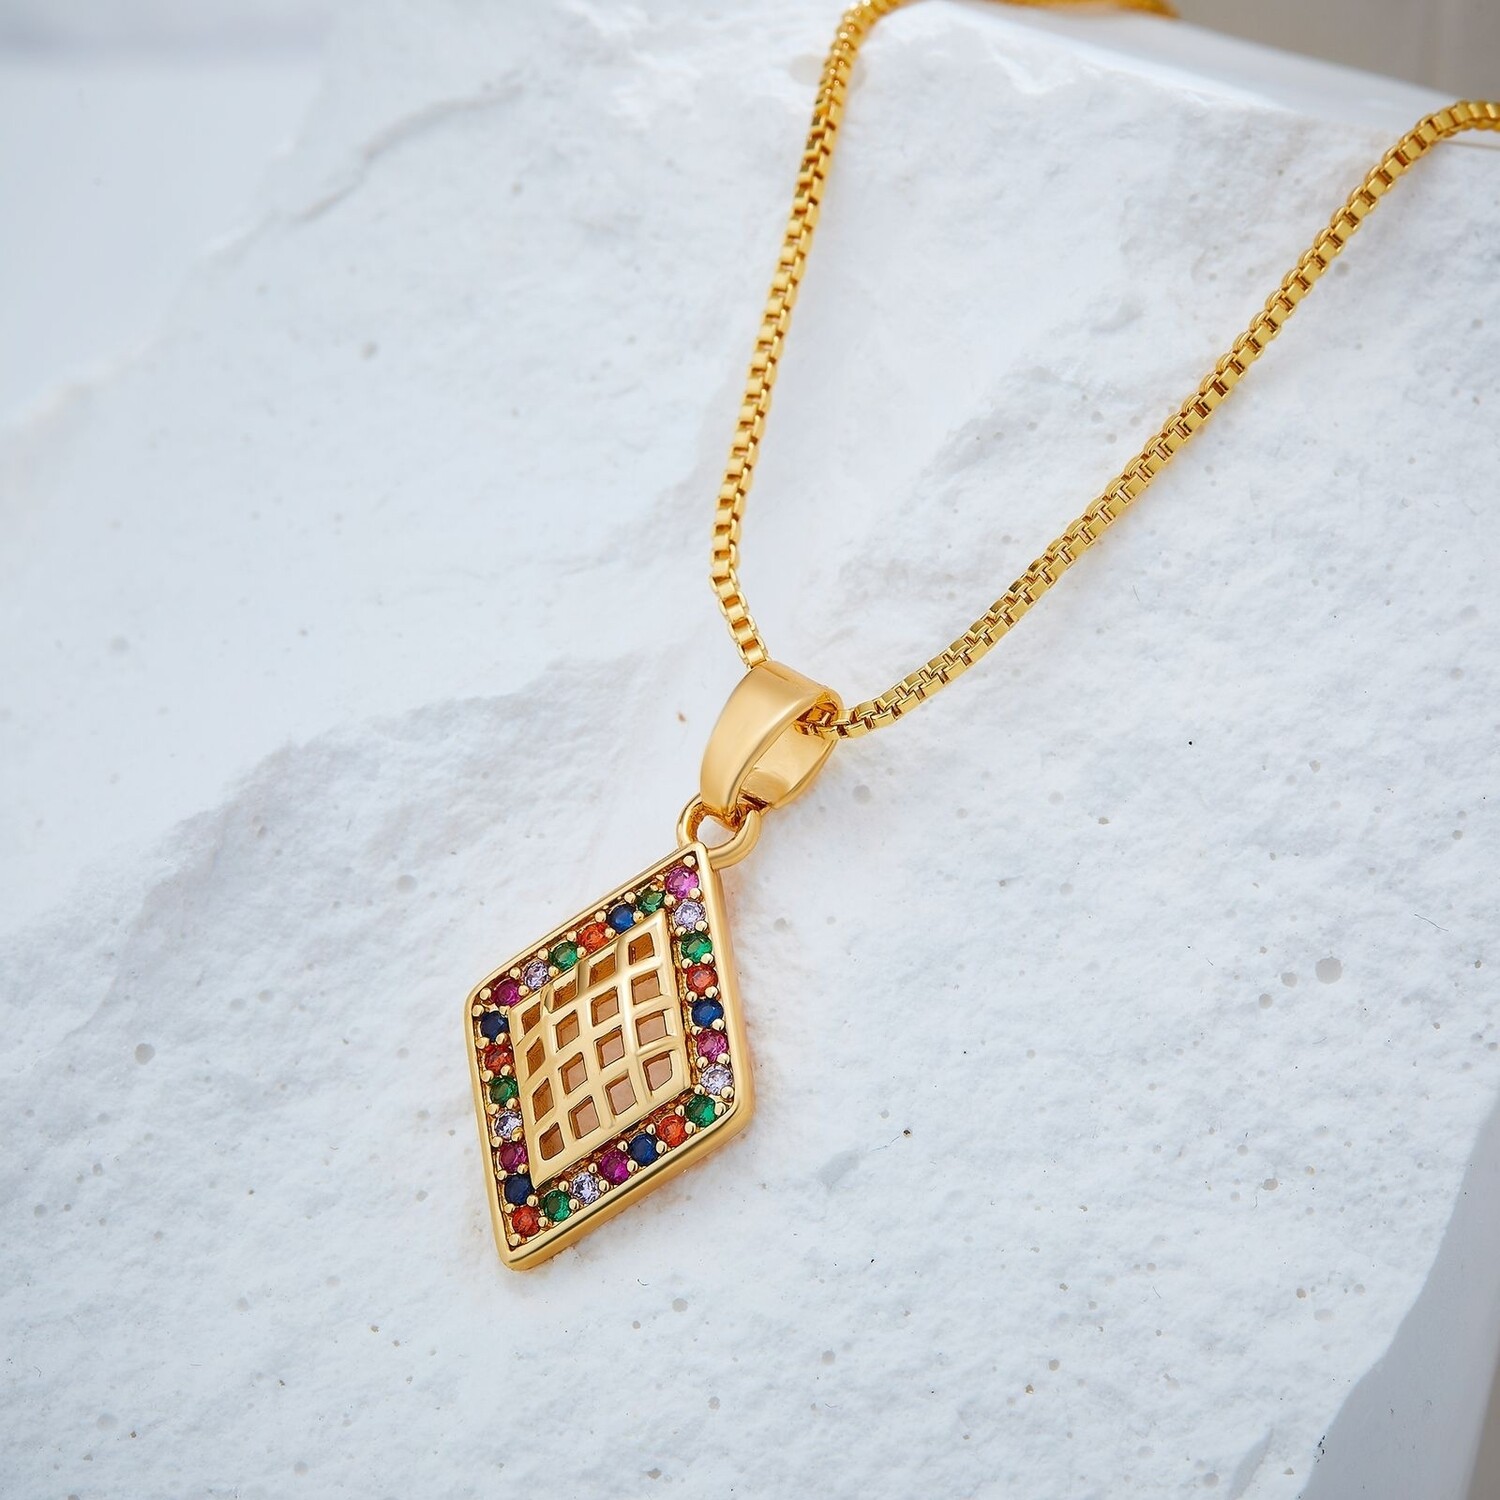 Women rose gold coloured pendant fashion jewellery